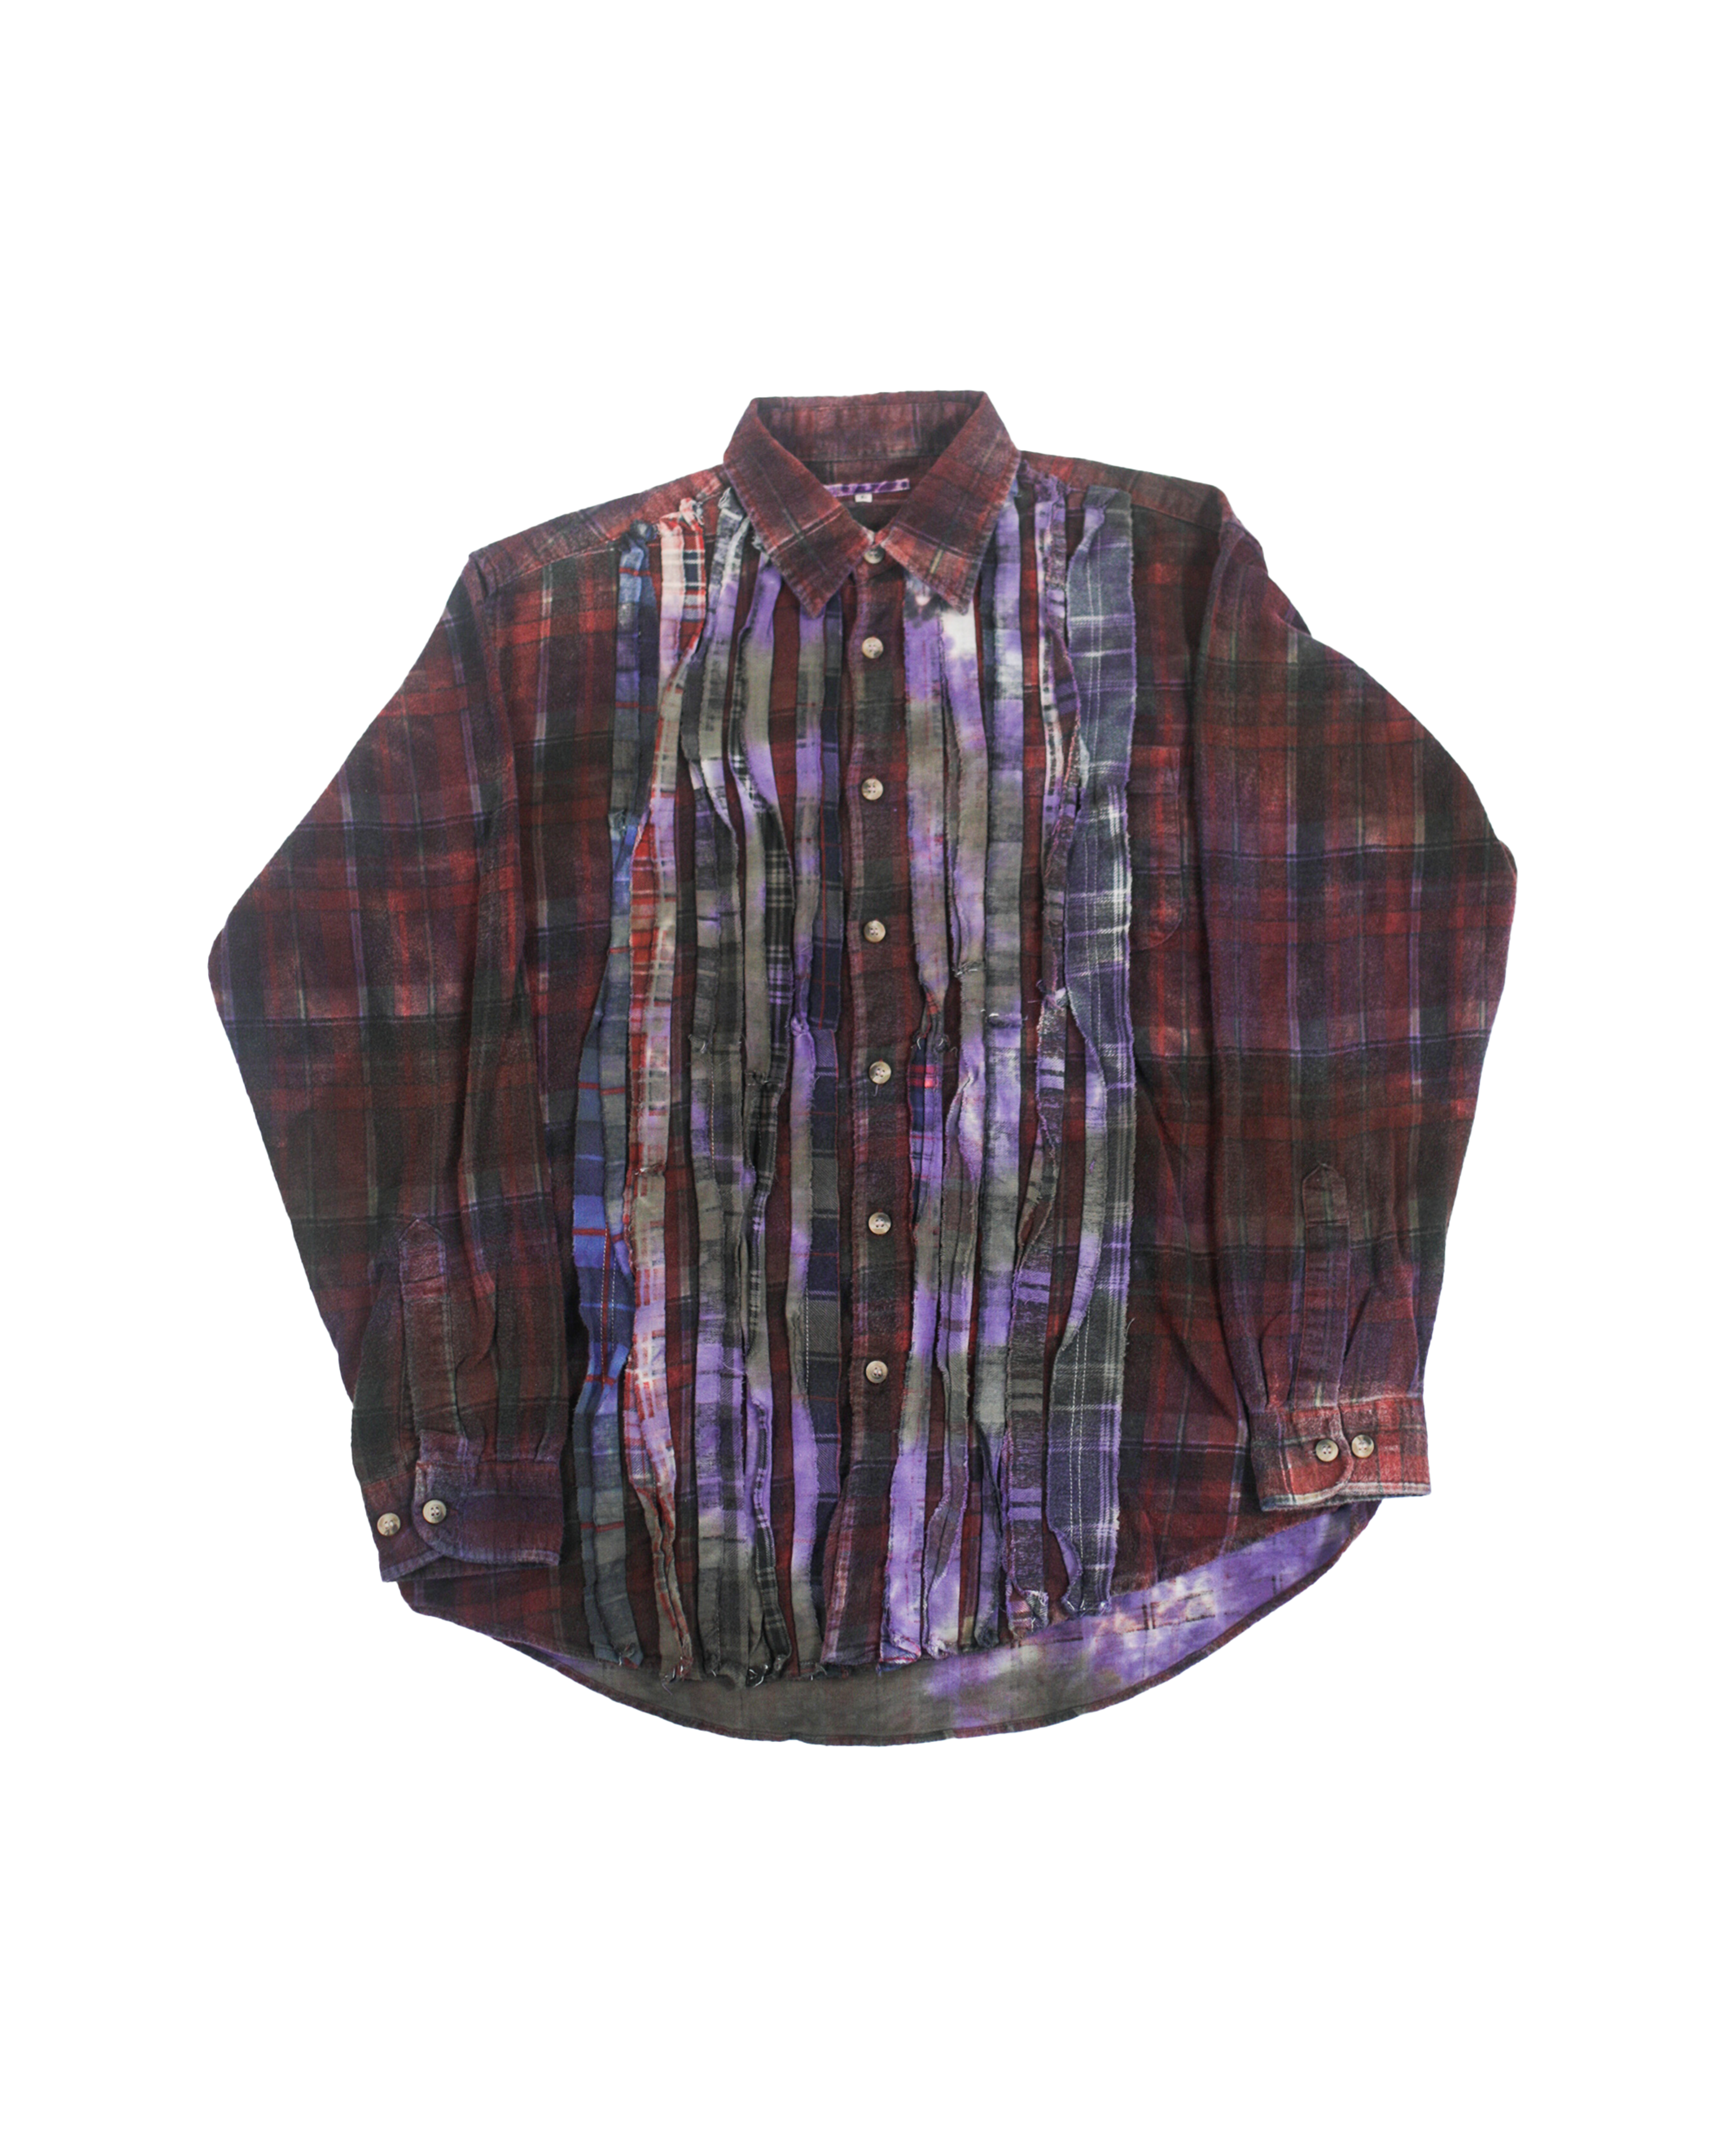 Alternate View 2 of Needles Flannel Shirt - Ribbon Shirt/Tie Dye